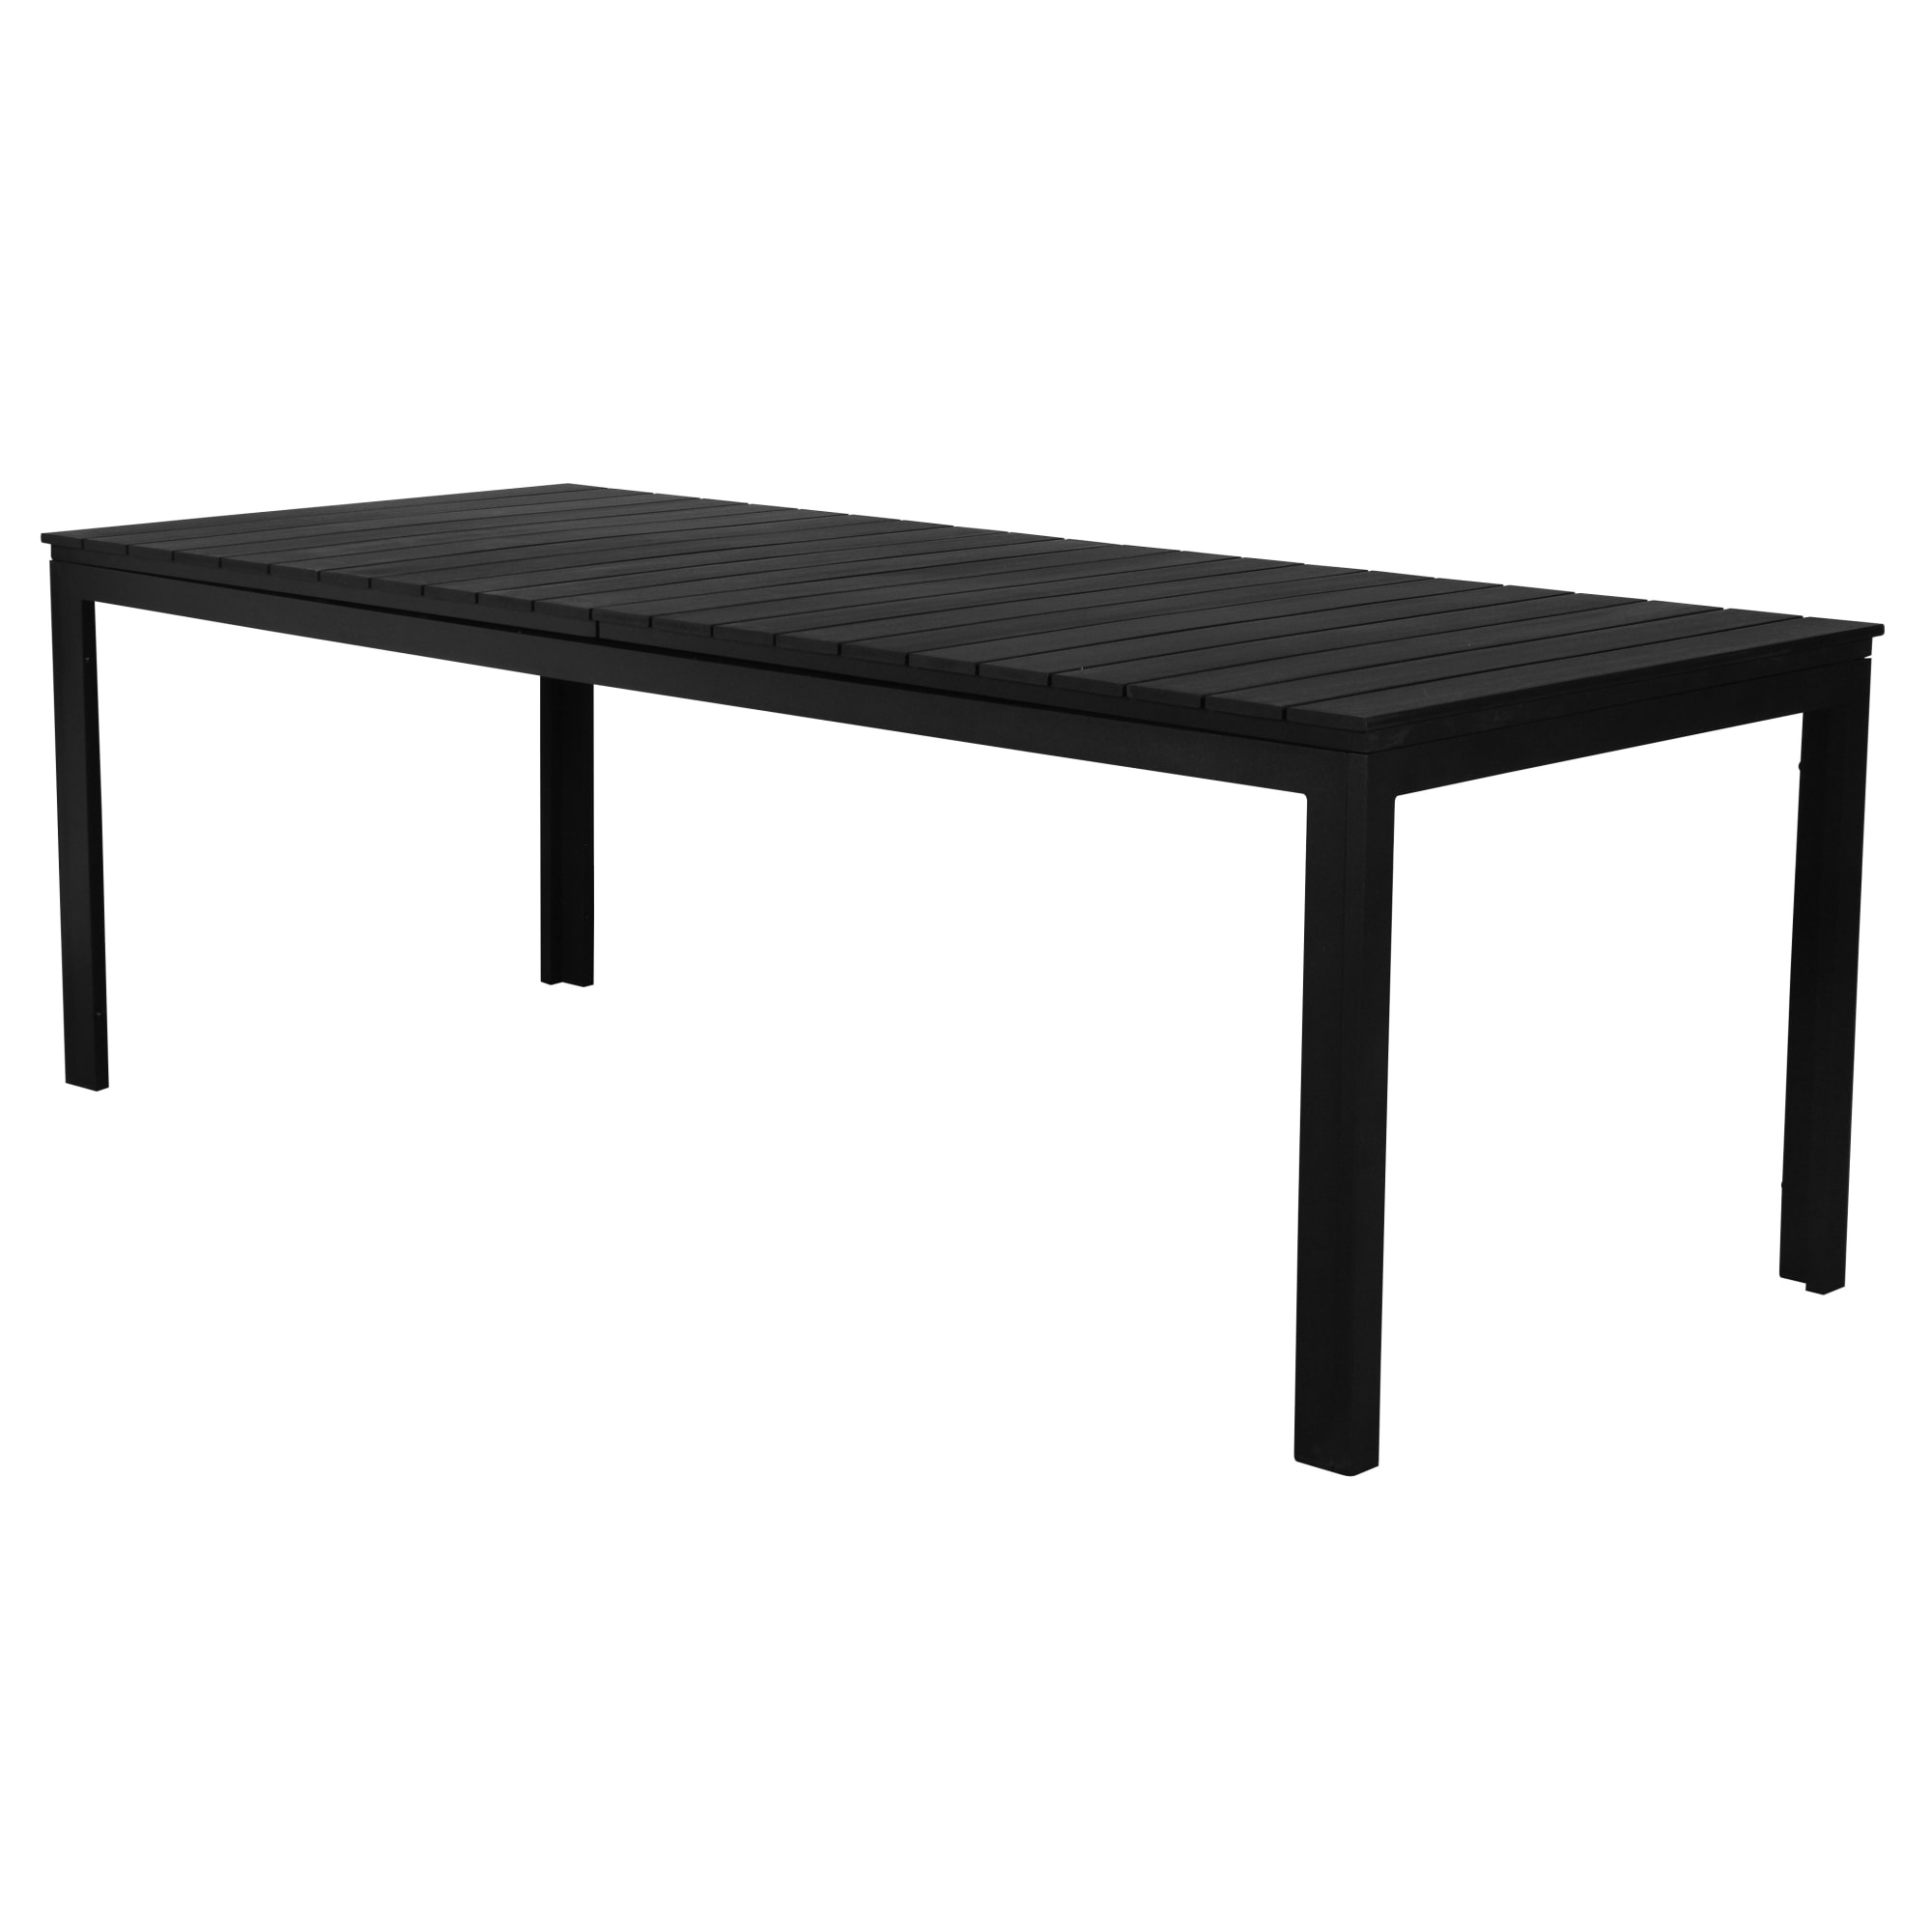 Udtræksbord (L 220/280 cm) i nonwood